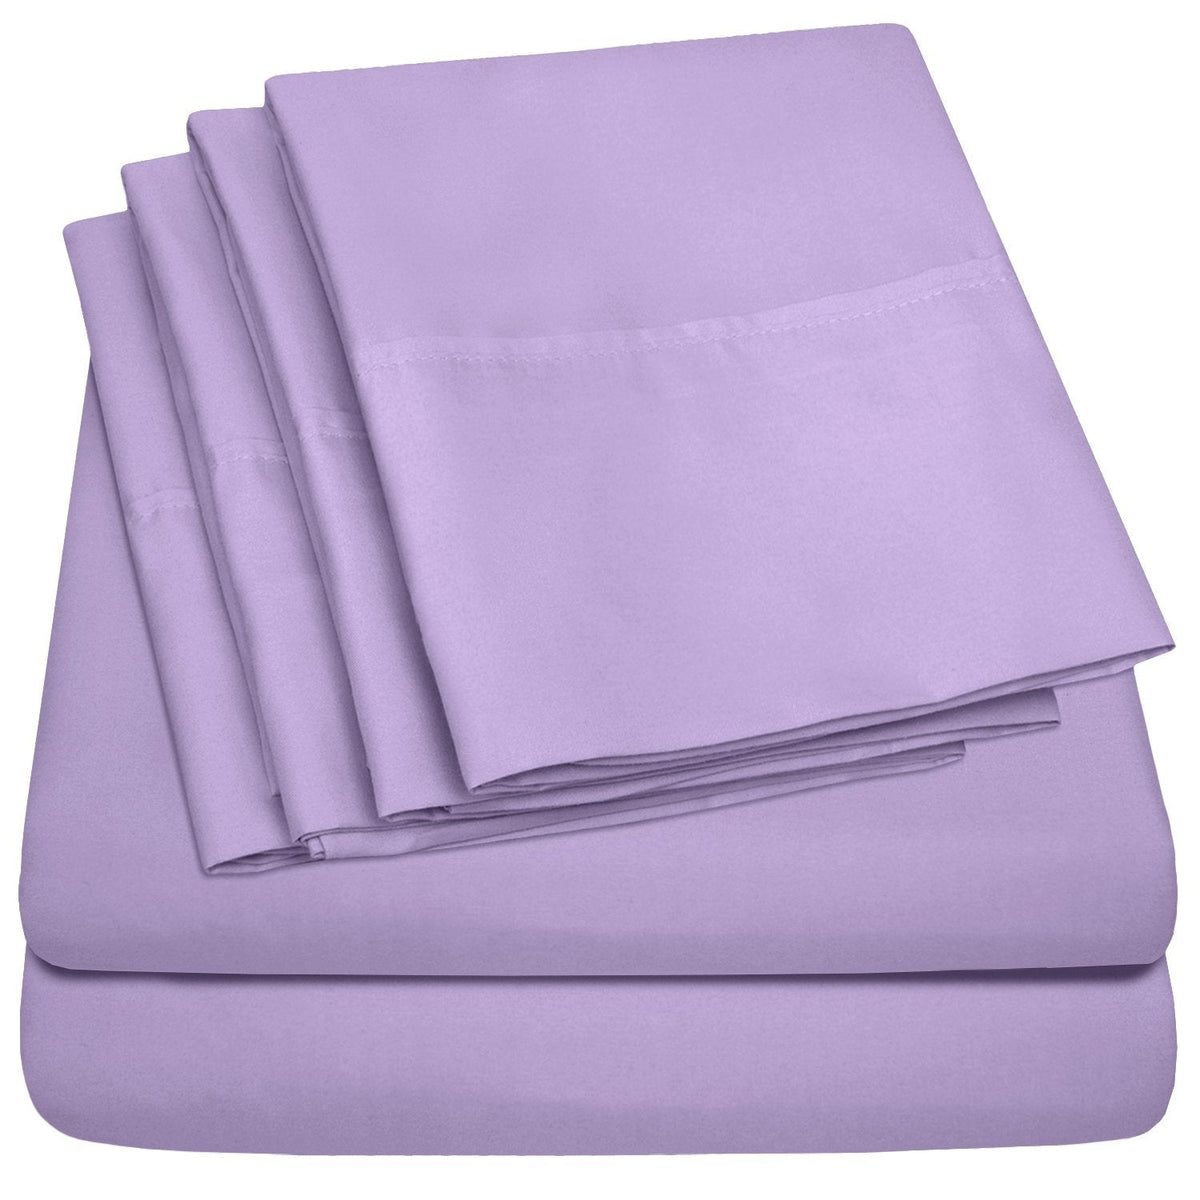 Deluxe 6-Piece Bed Sheet Set (Lavender) - Folded